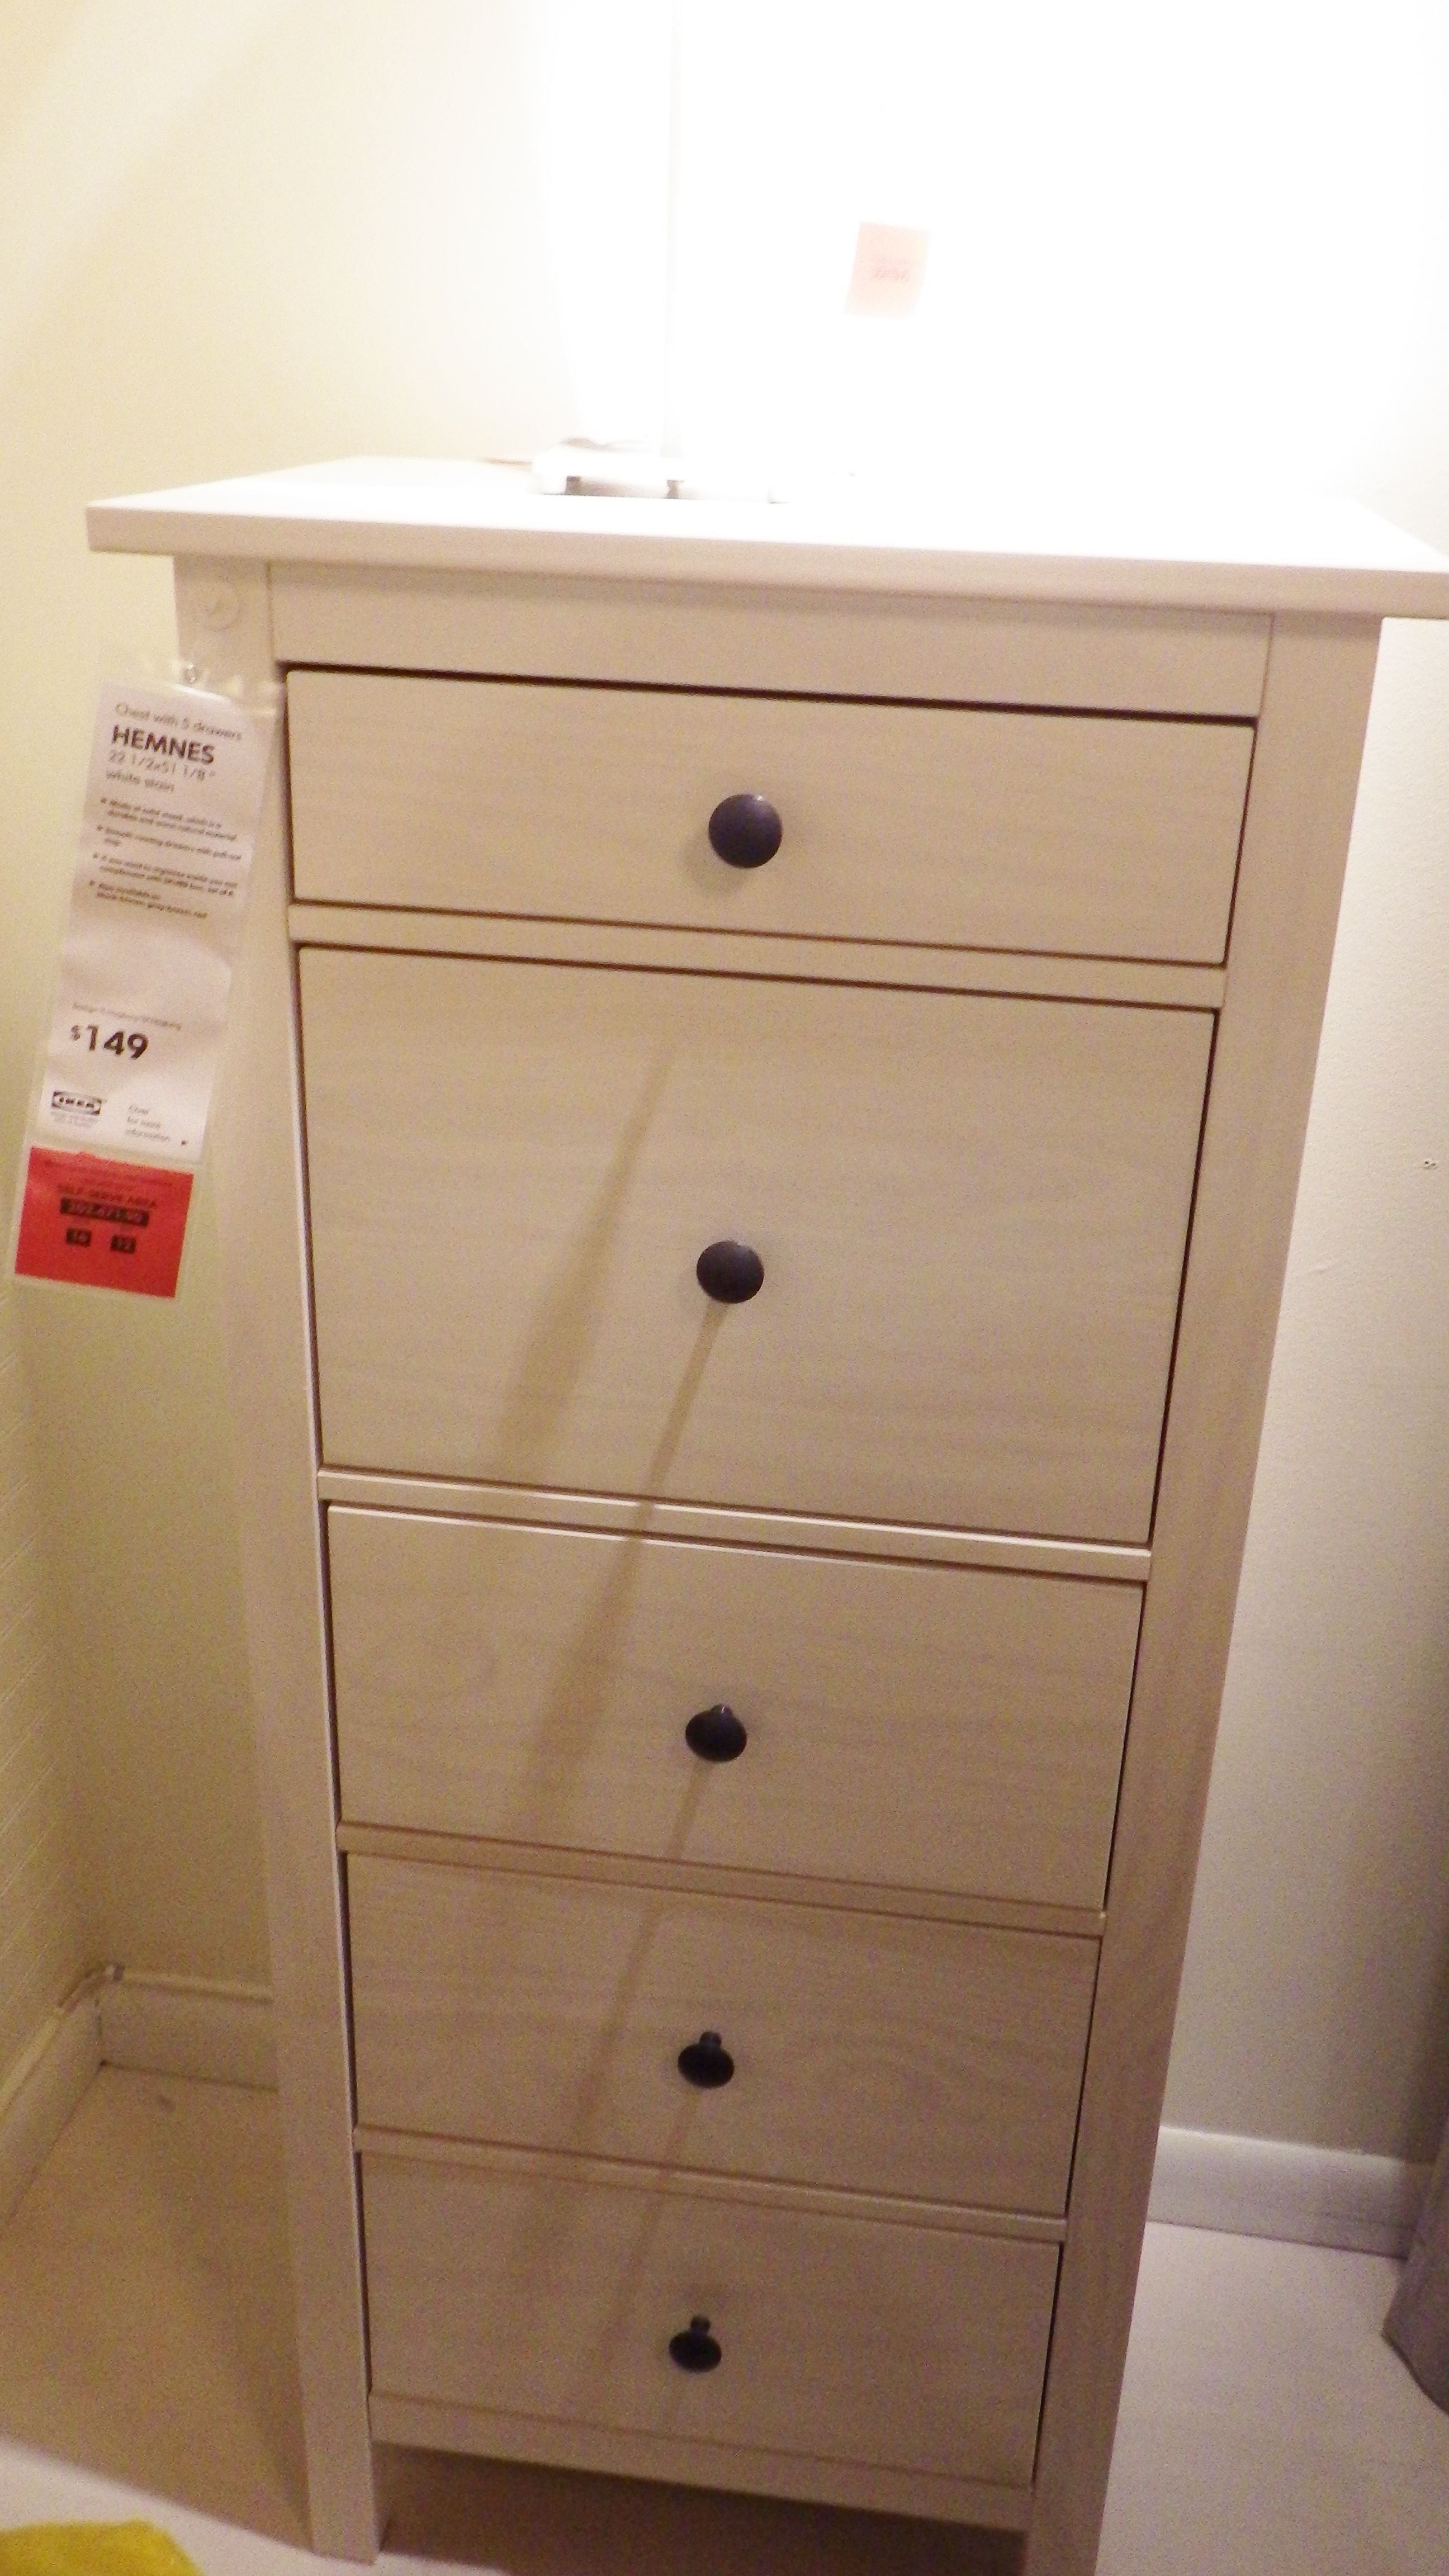 Bedroom Dressers for Sale New Ikea Hemnes Tall Skinny Dresser 150